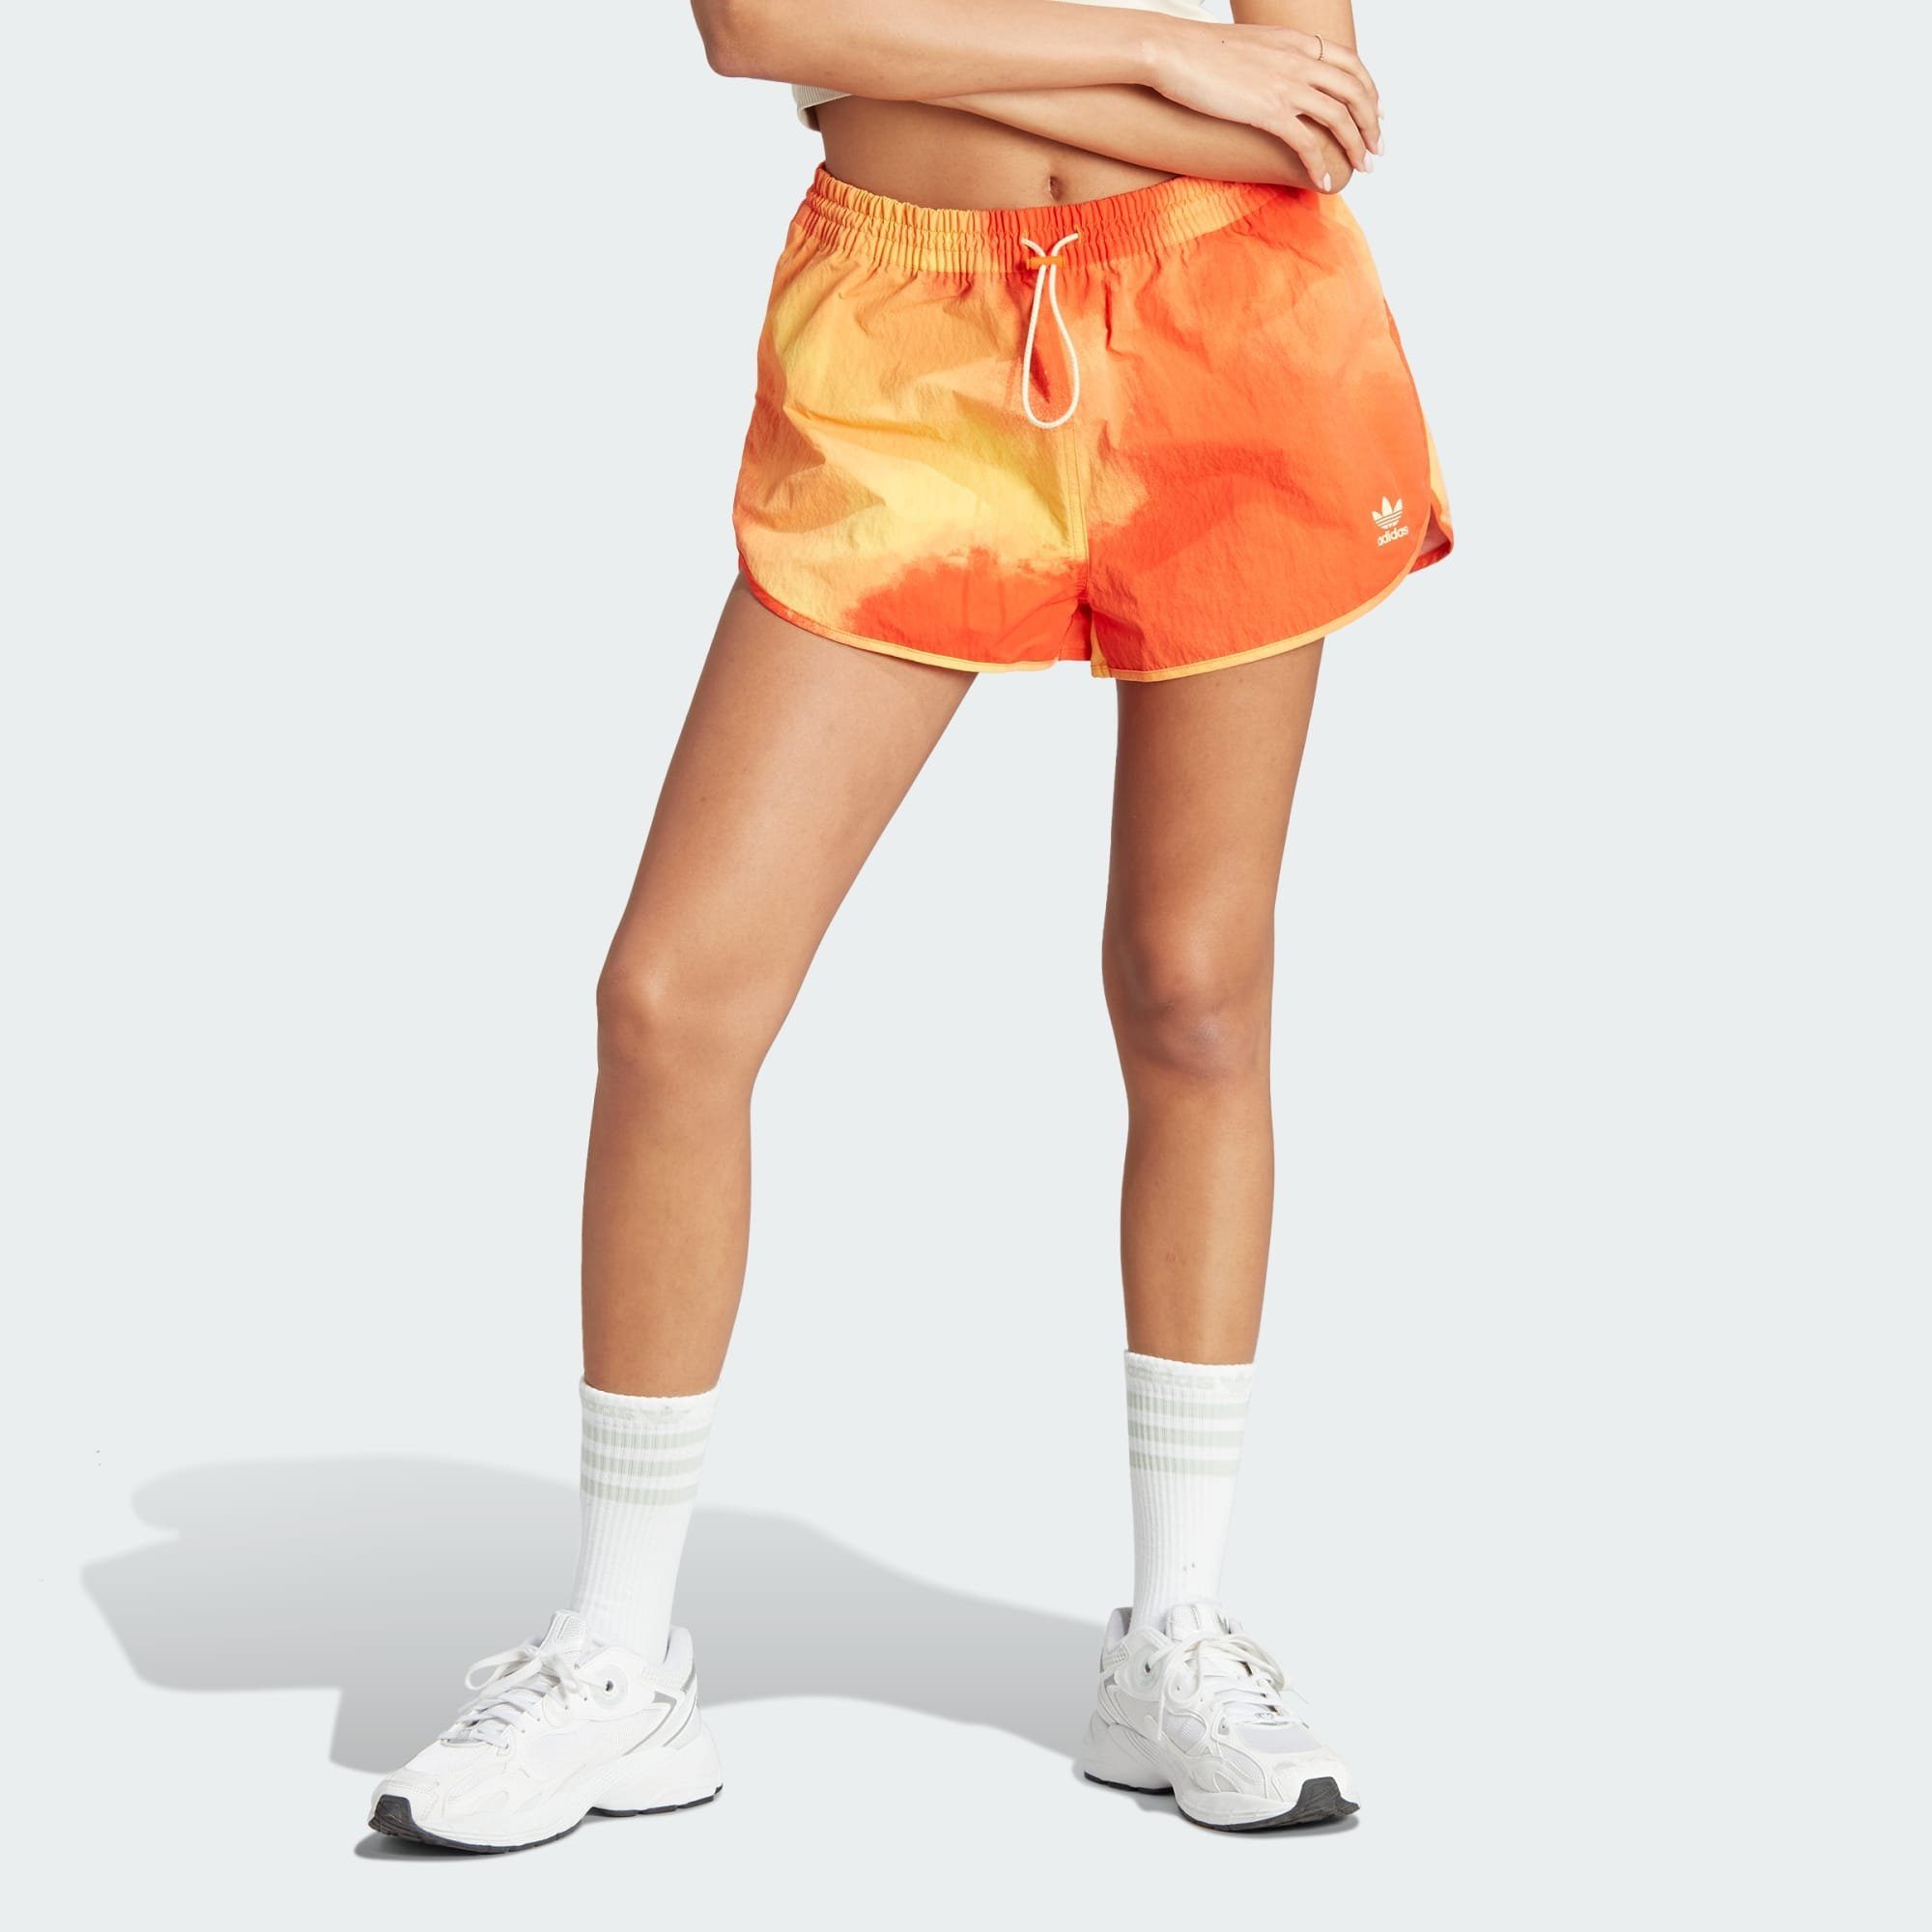 SHORTS adidas Shorts Gold Multicolor Originals COLOR RUNNER FADE / Bold